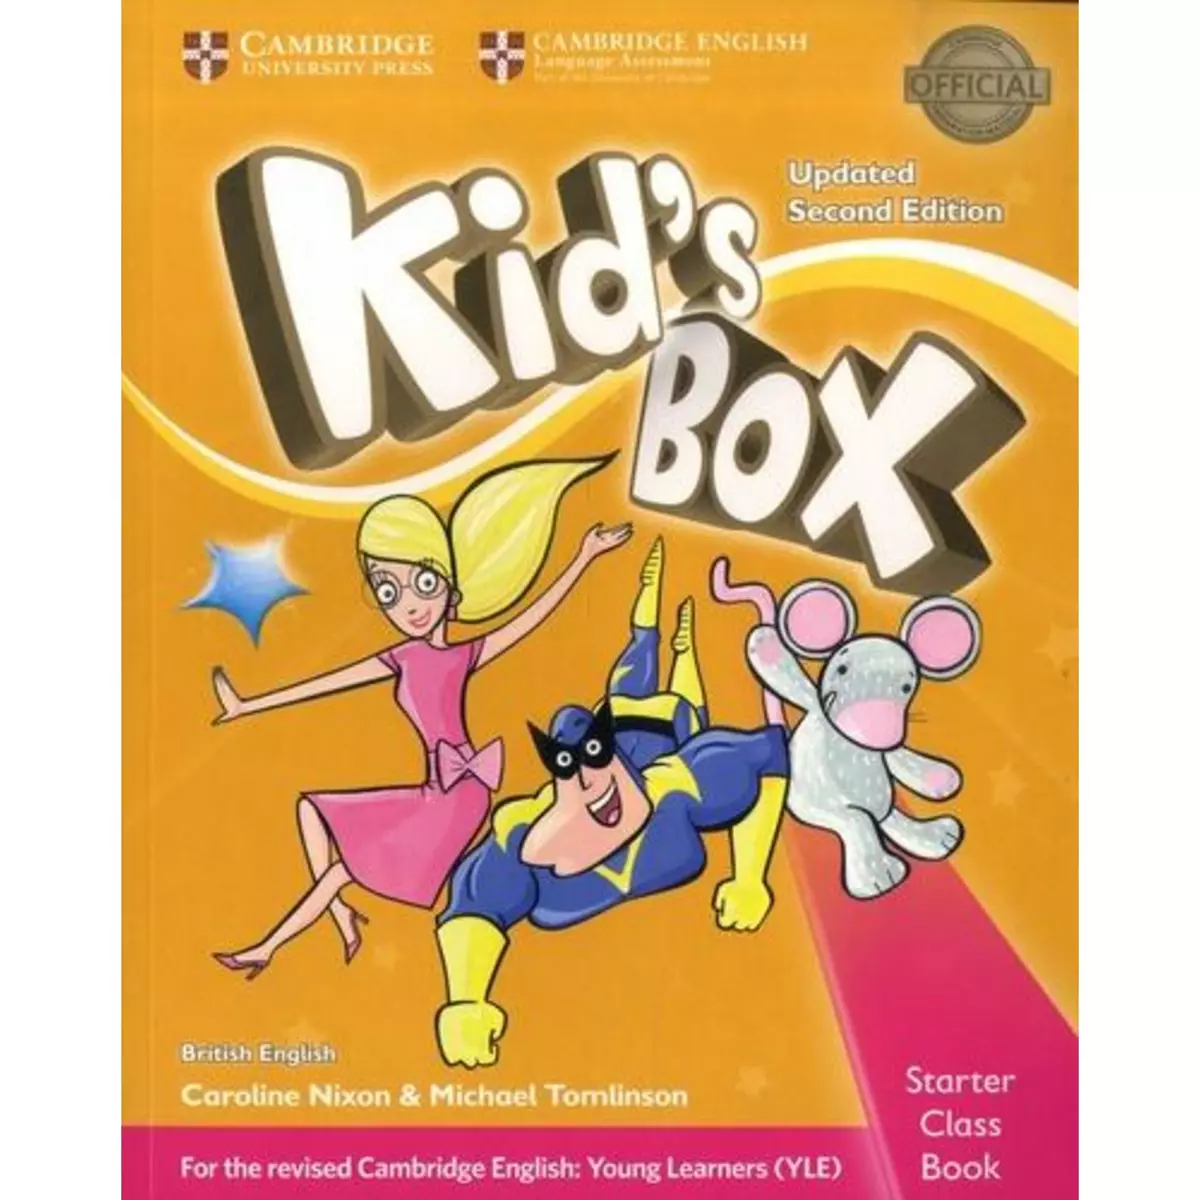  KID'S BOX. STARTER CLASS BOOK WITH CD-ROM, 2ND EDITION, EDITION EN ANGLAIS, AVEC 1 CD AUDIO, Nixon Caroline